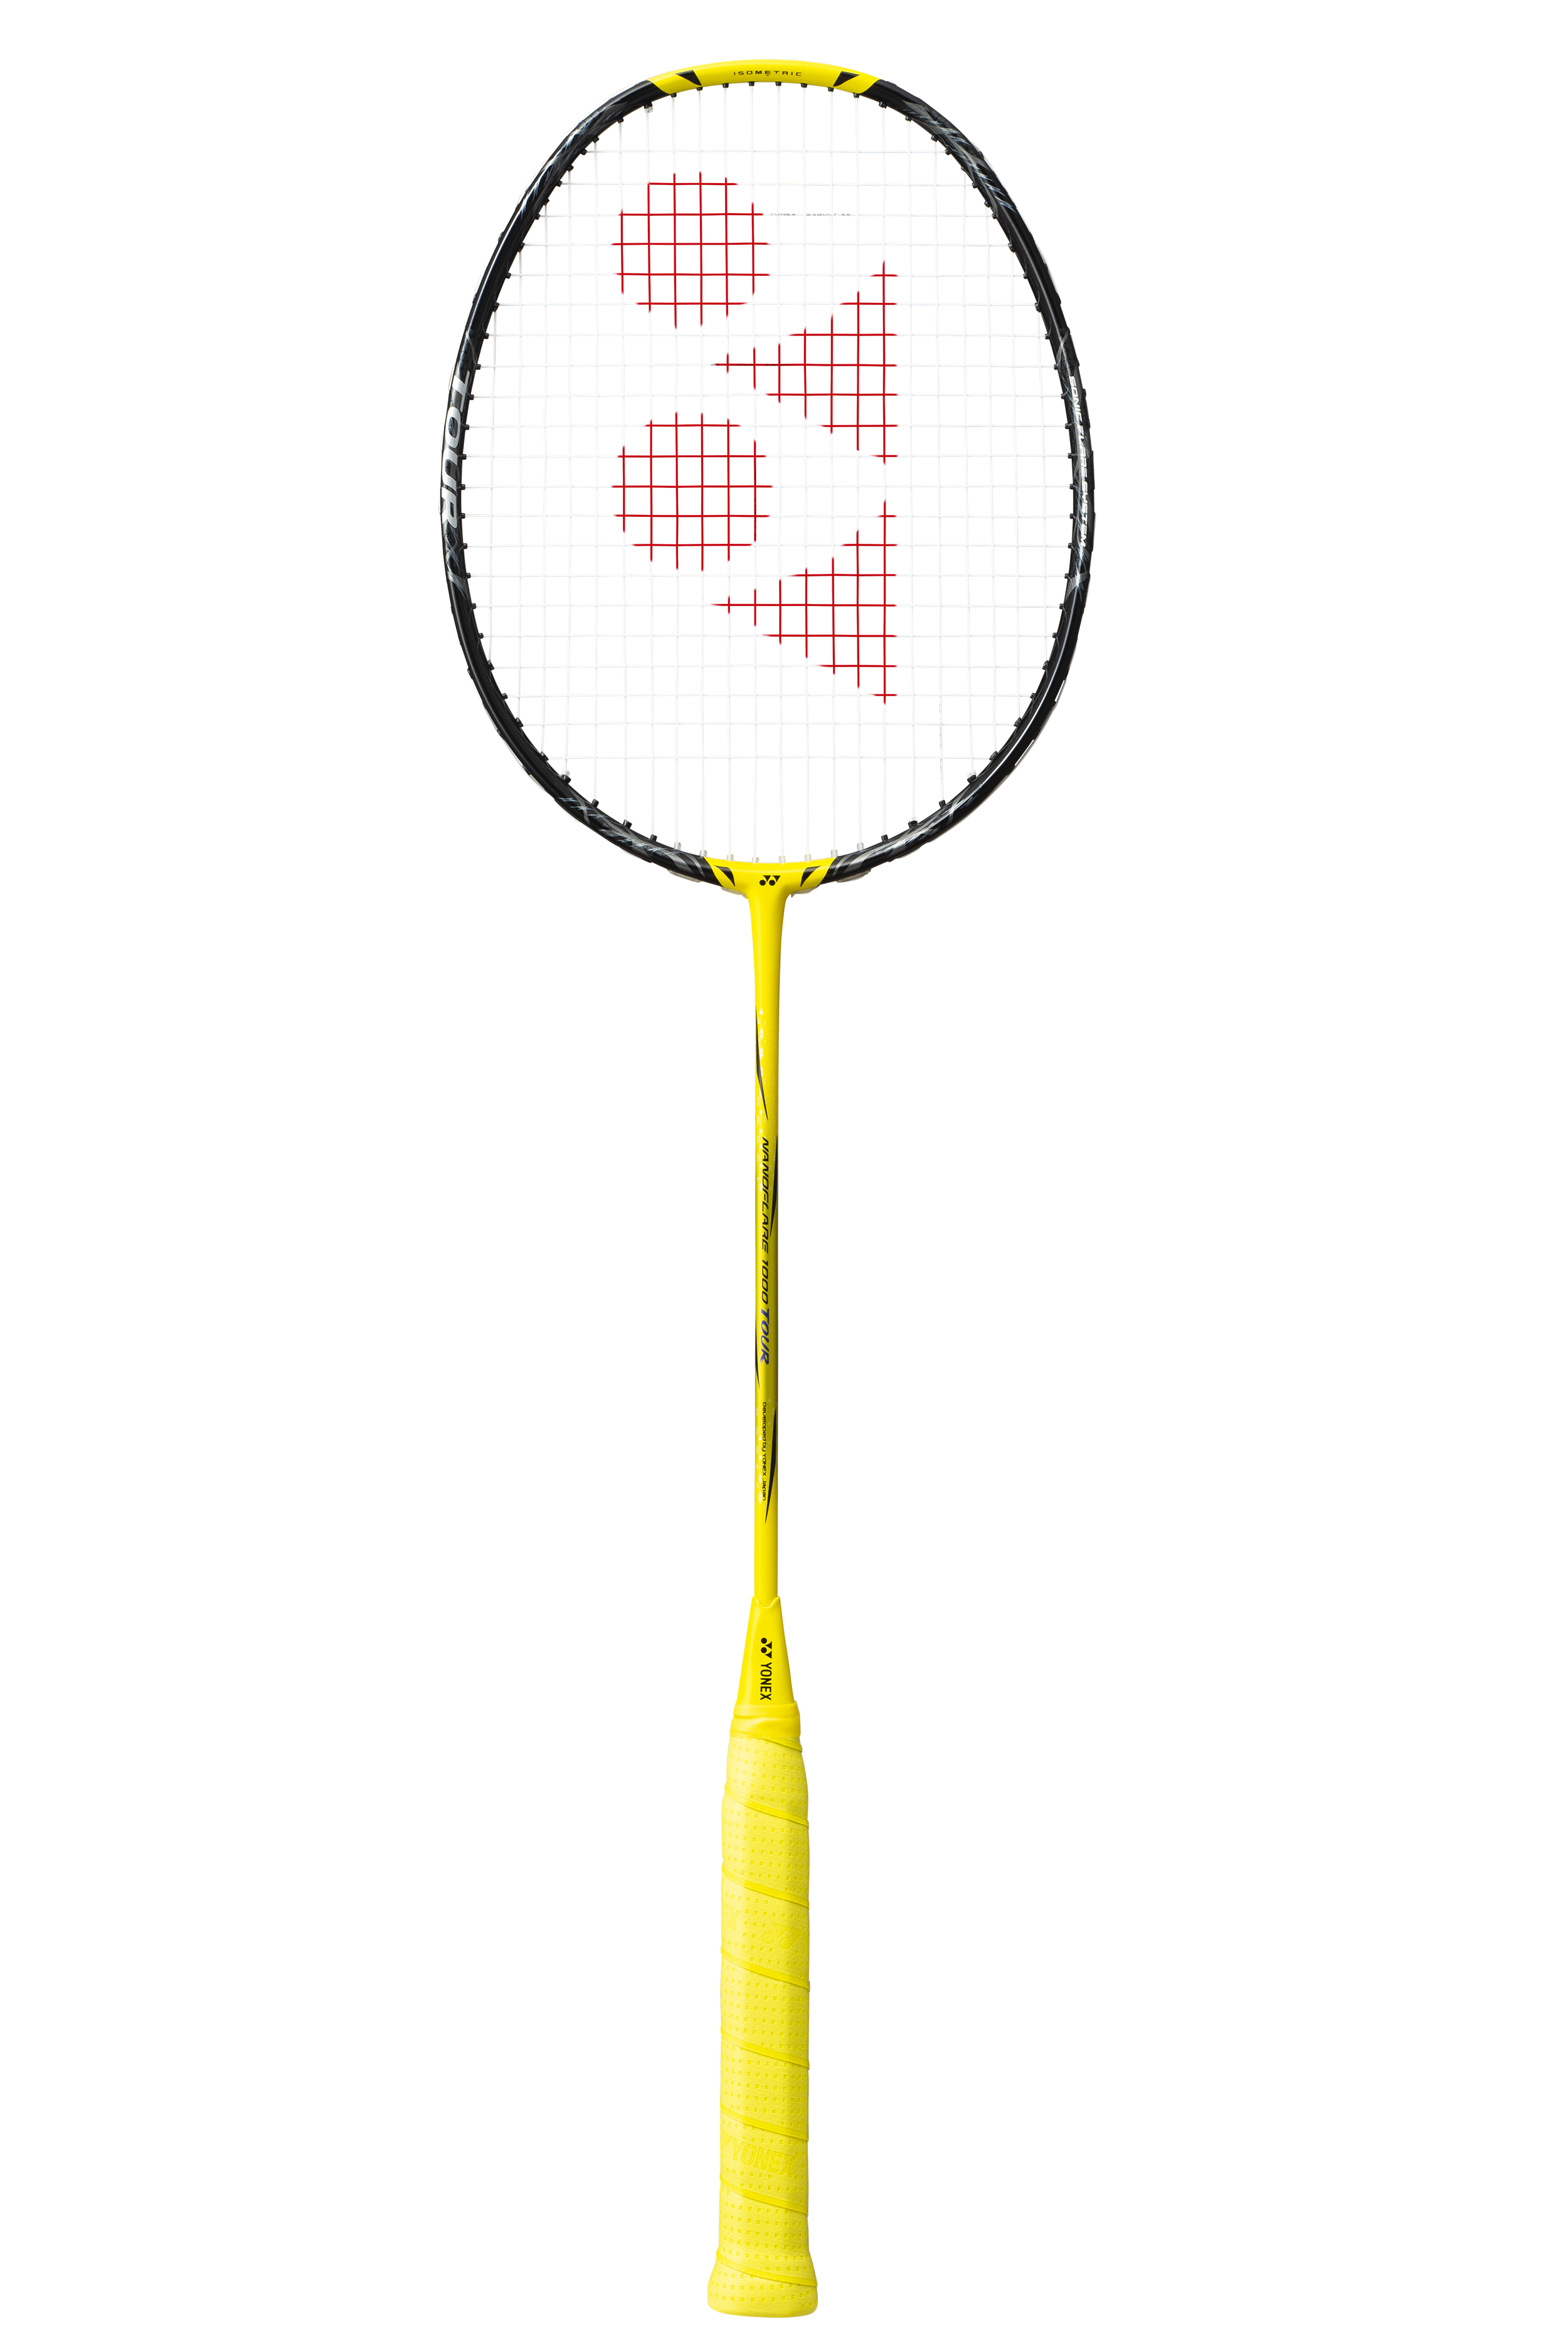 Yonex Nanoflare 1000 Tour Badminton Racket